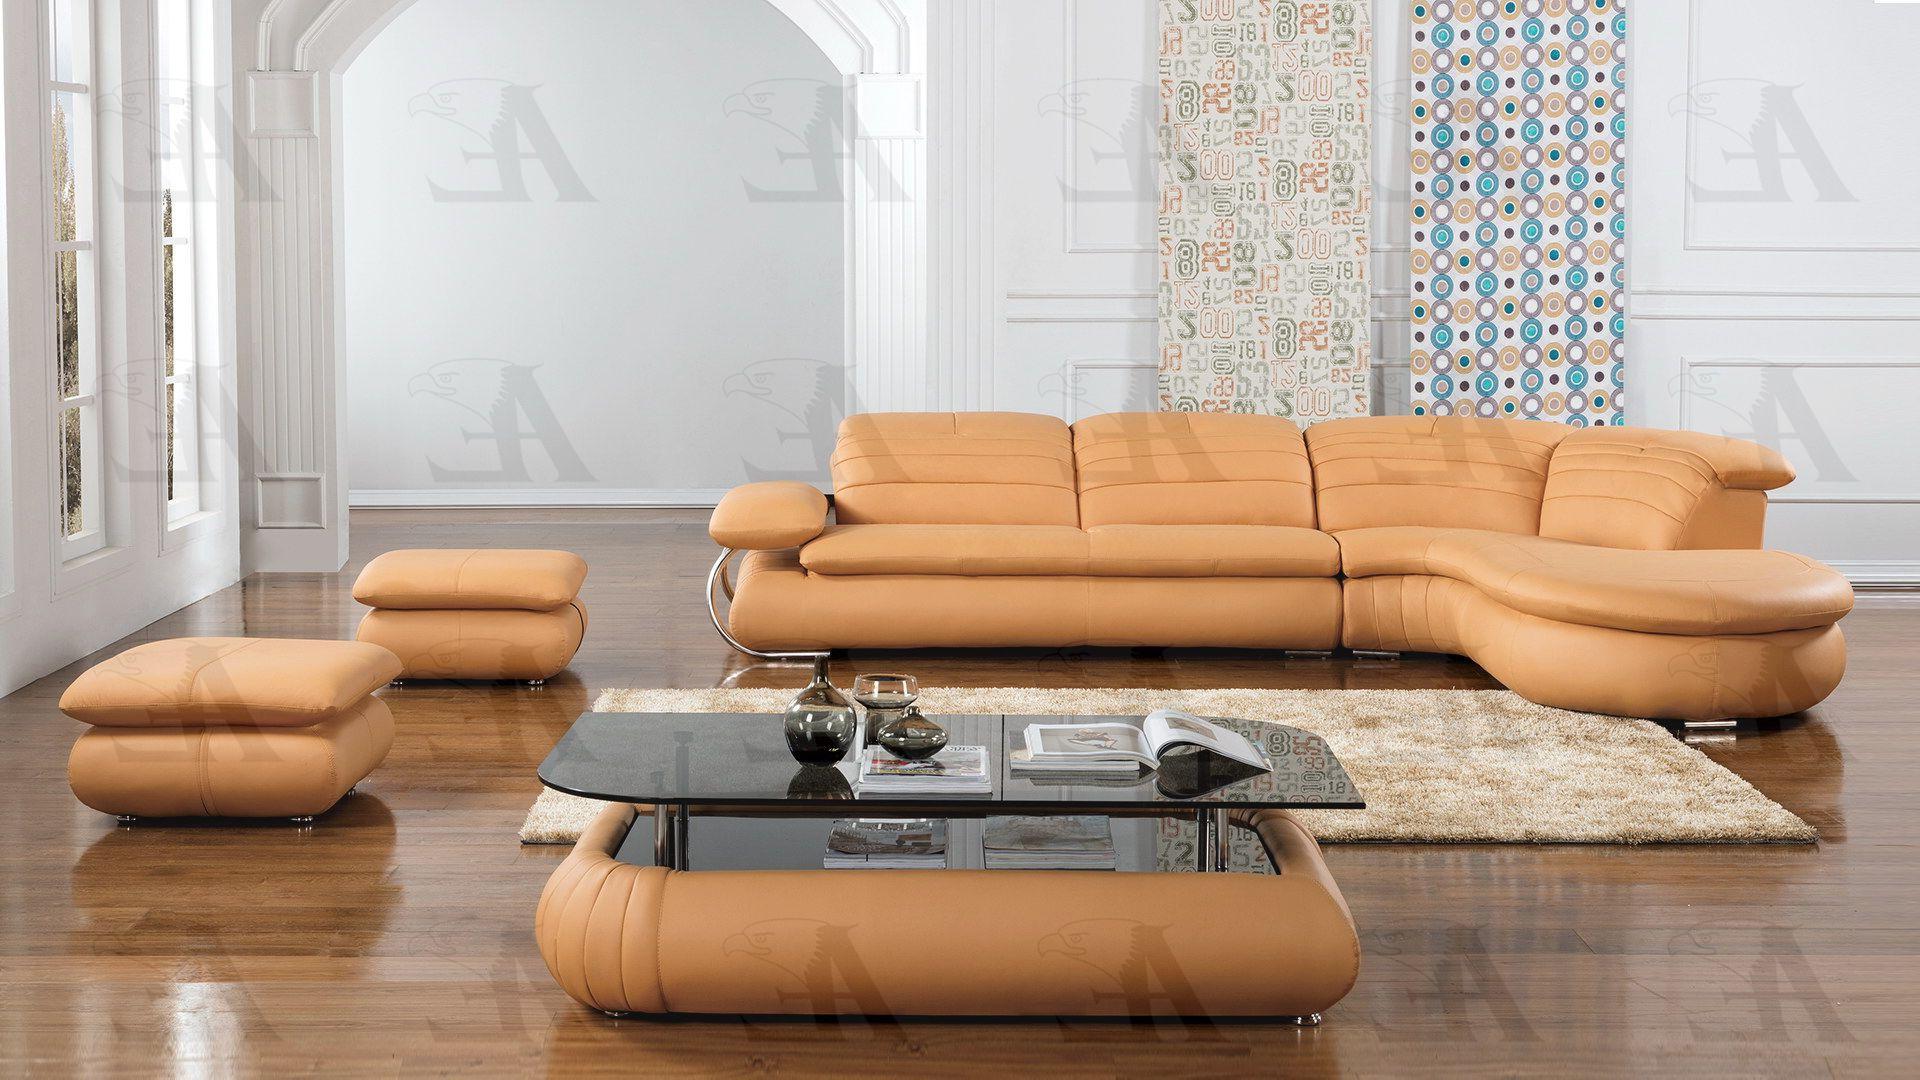 

    
American EagleEK-LB119-YO Sofa RHC Chaise Table 2 Ottomans Set Genuine Leather
